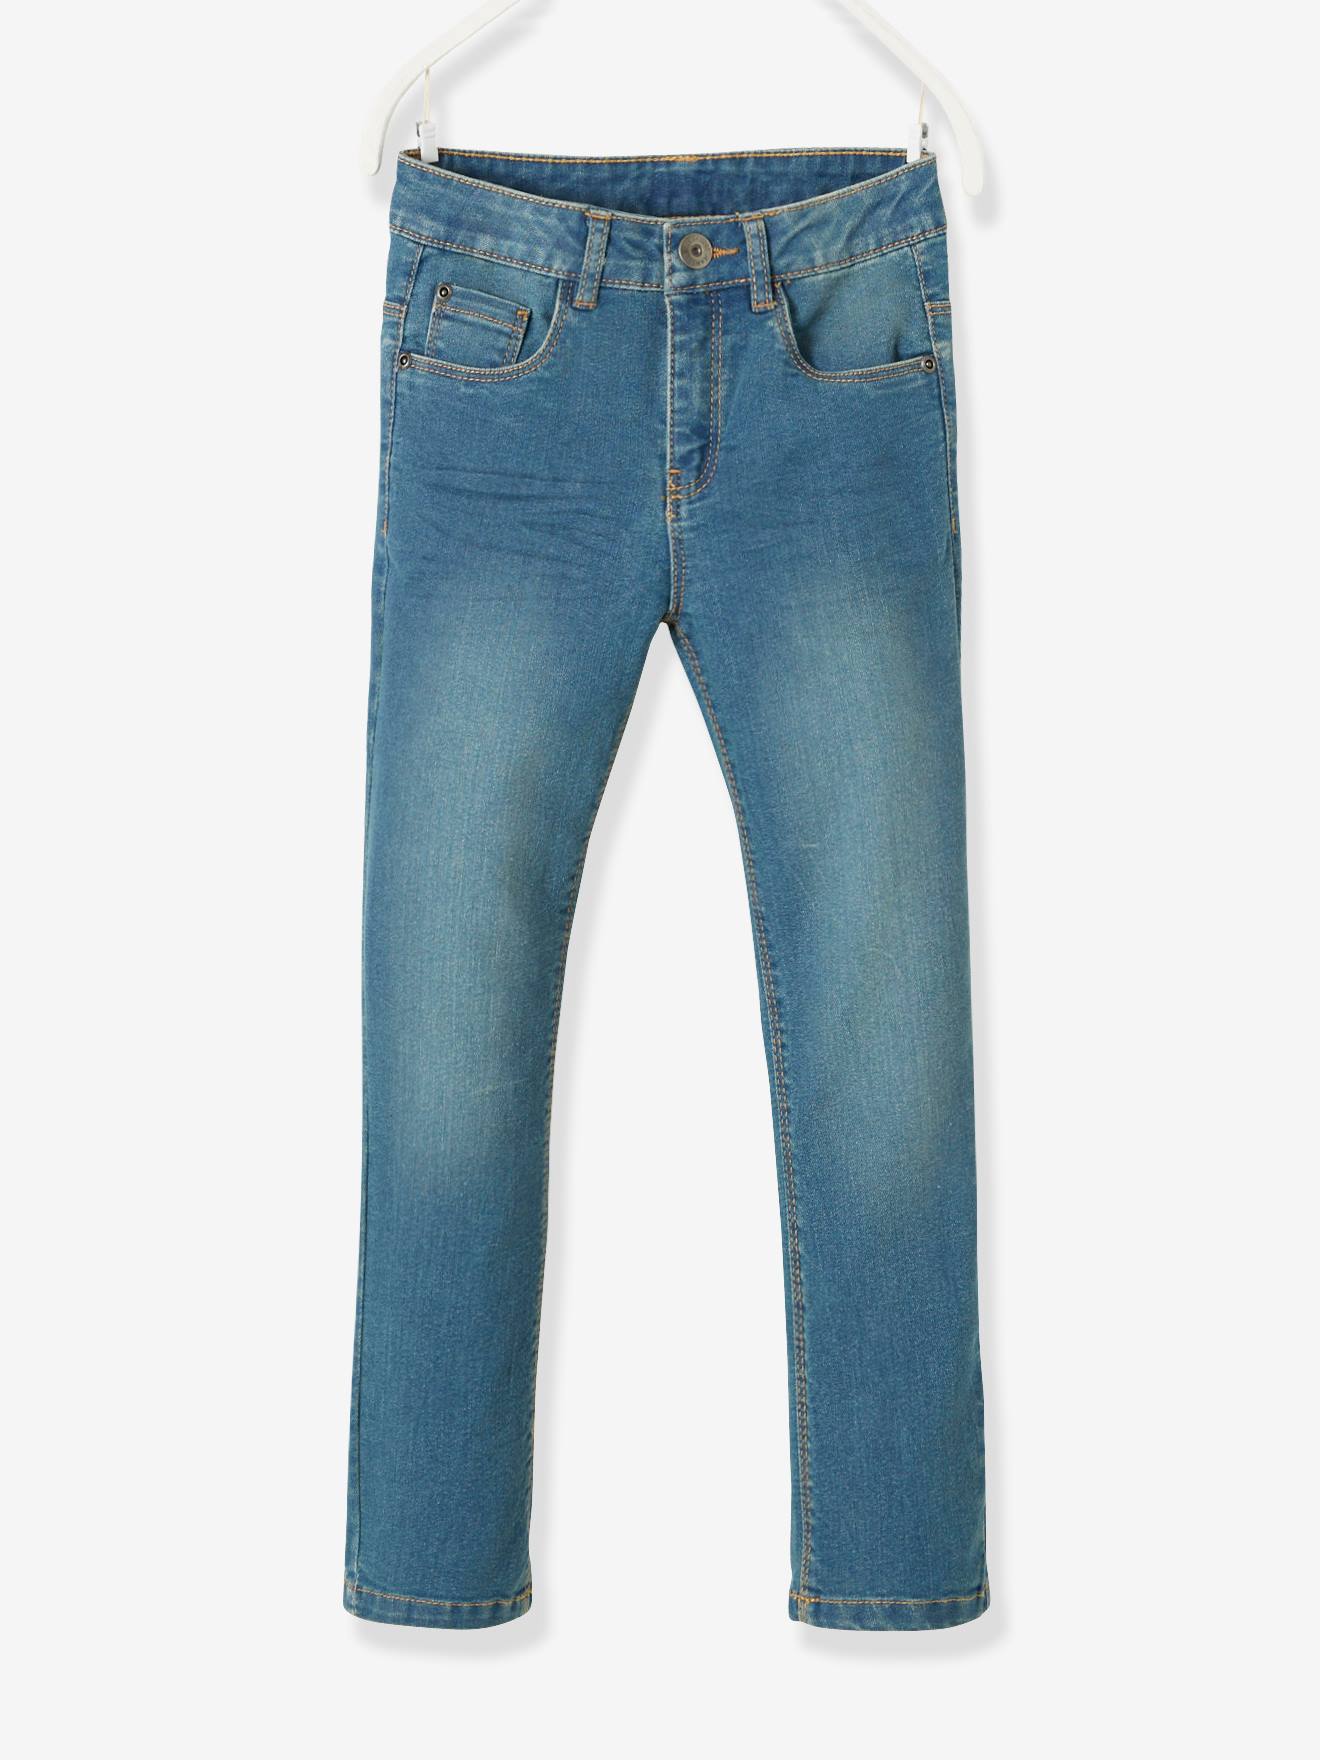 boys jeans price